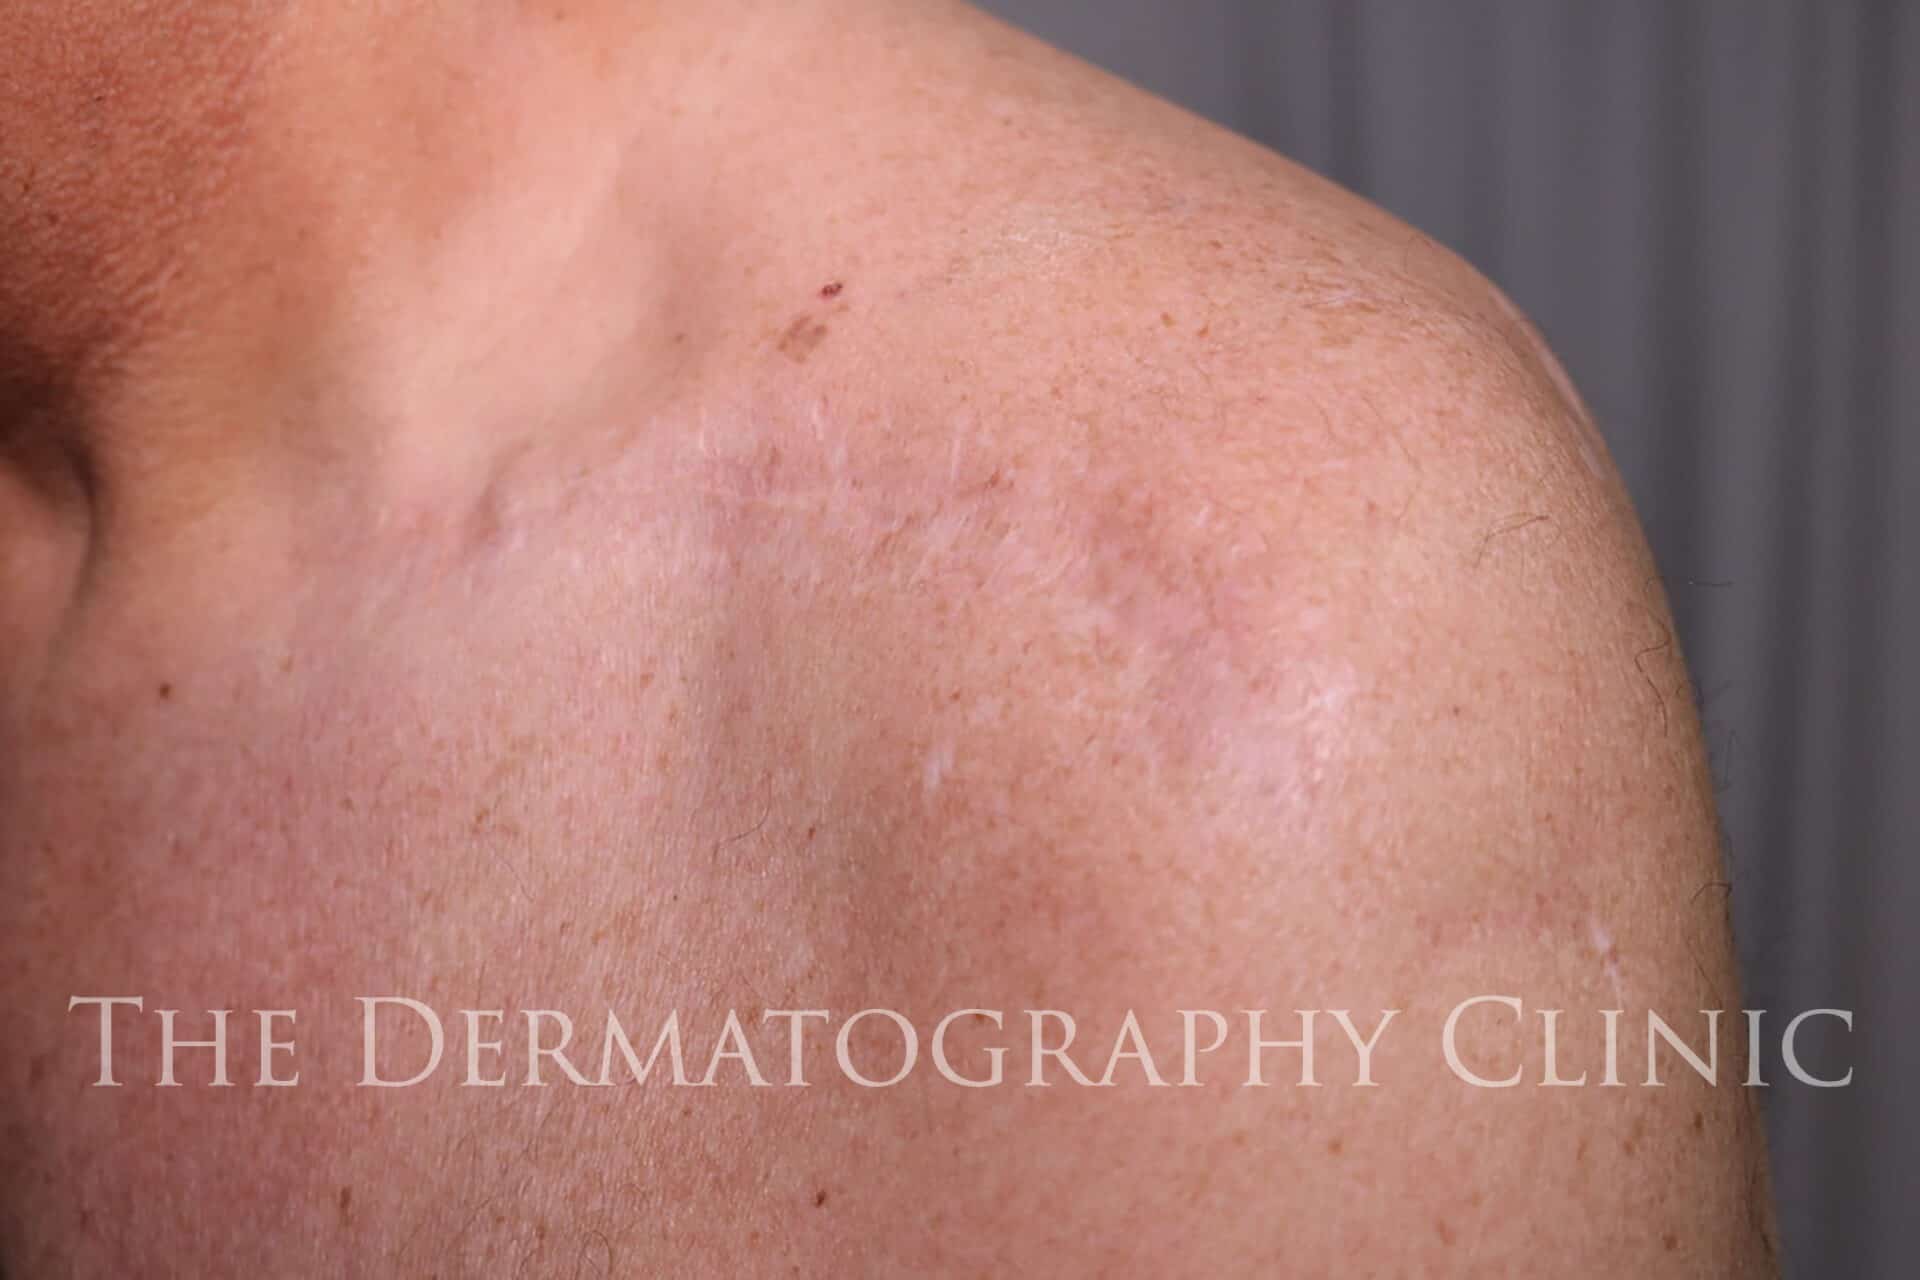 Camouflage tattoo | Self harm scars | One treatment. | Instagram